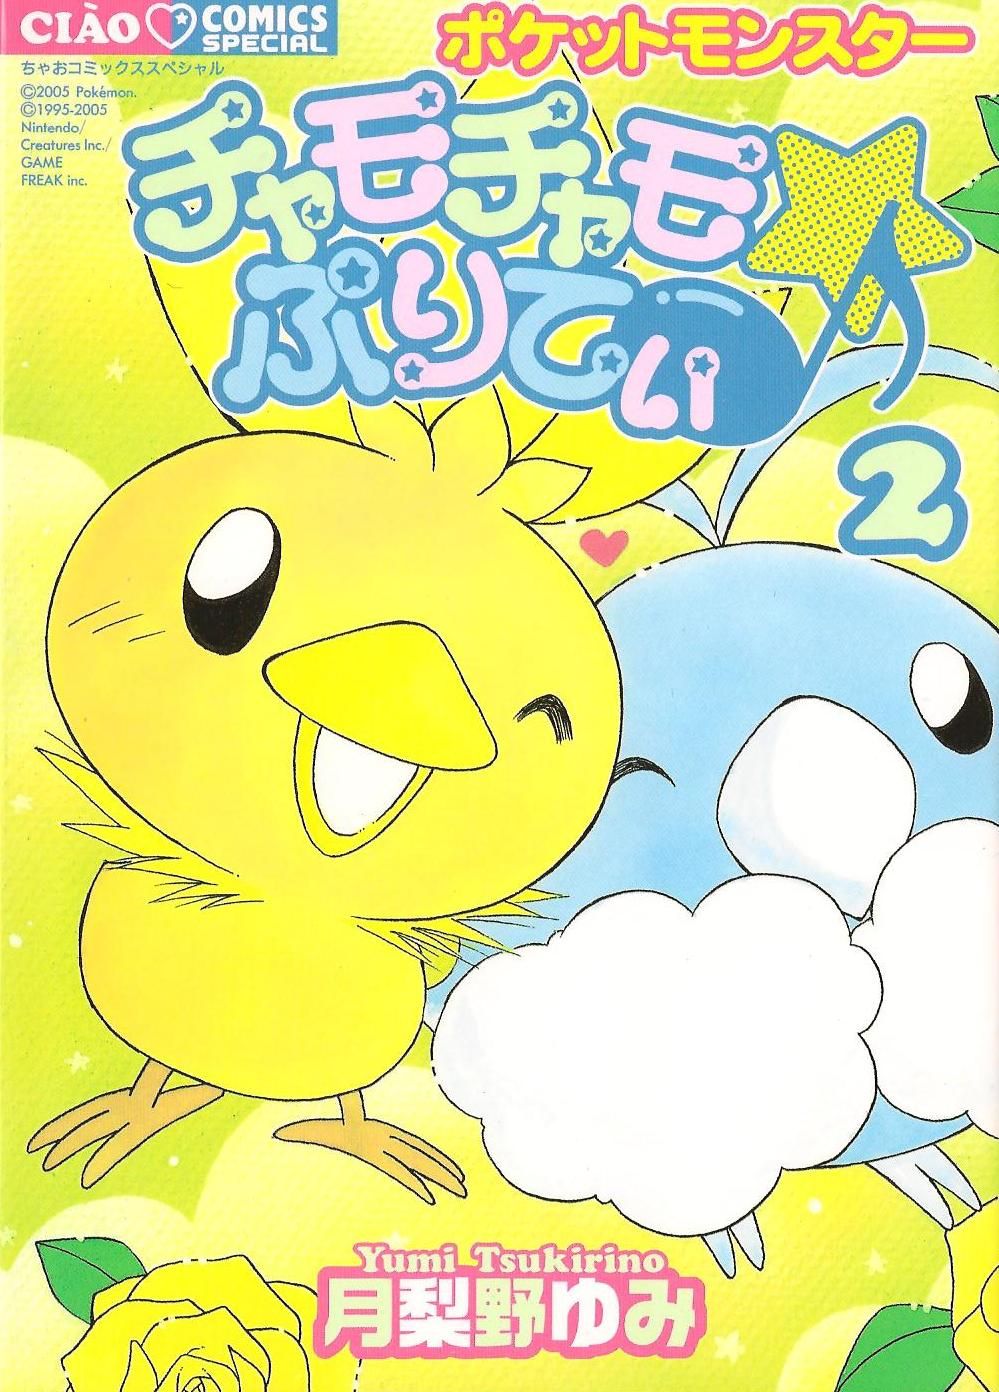 Pokémon Chamo-Chamo ☆ Pretty ♪ cover 1